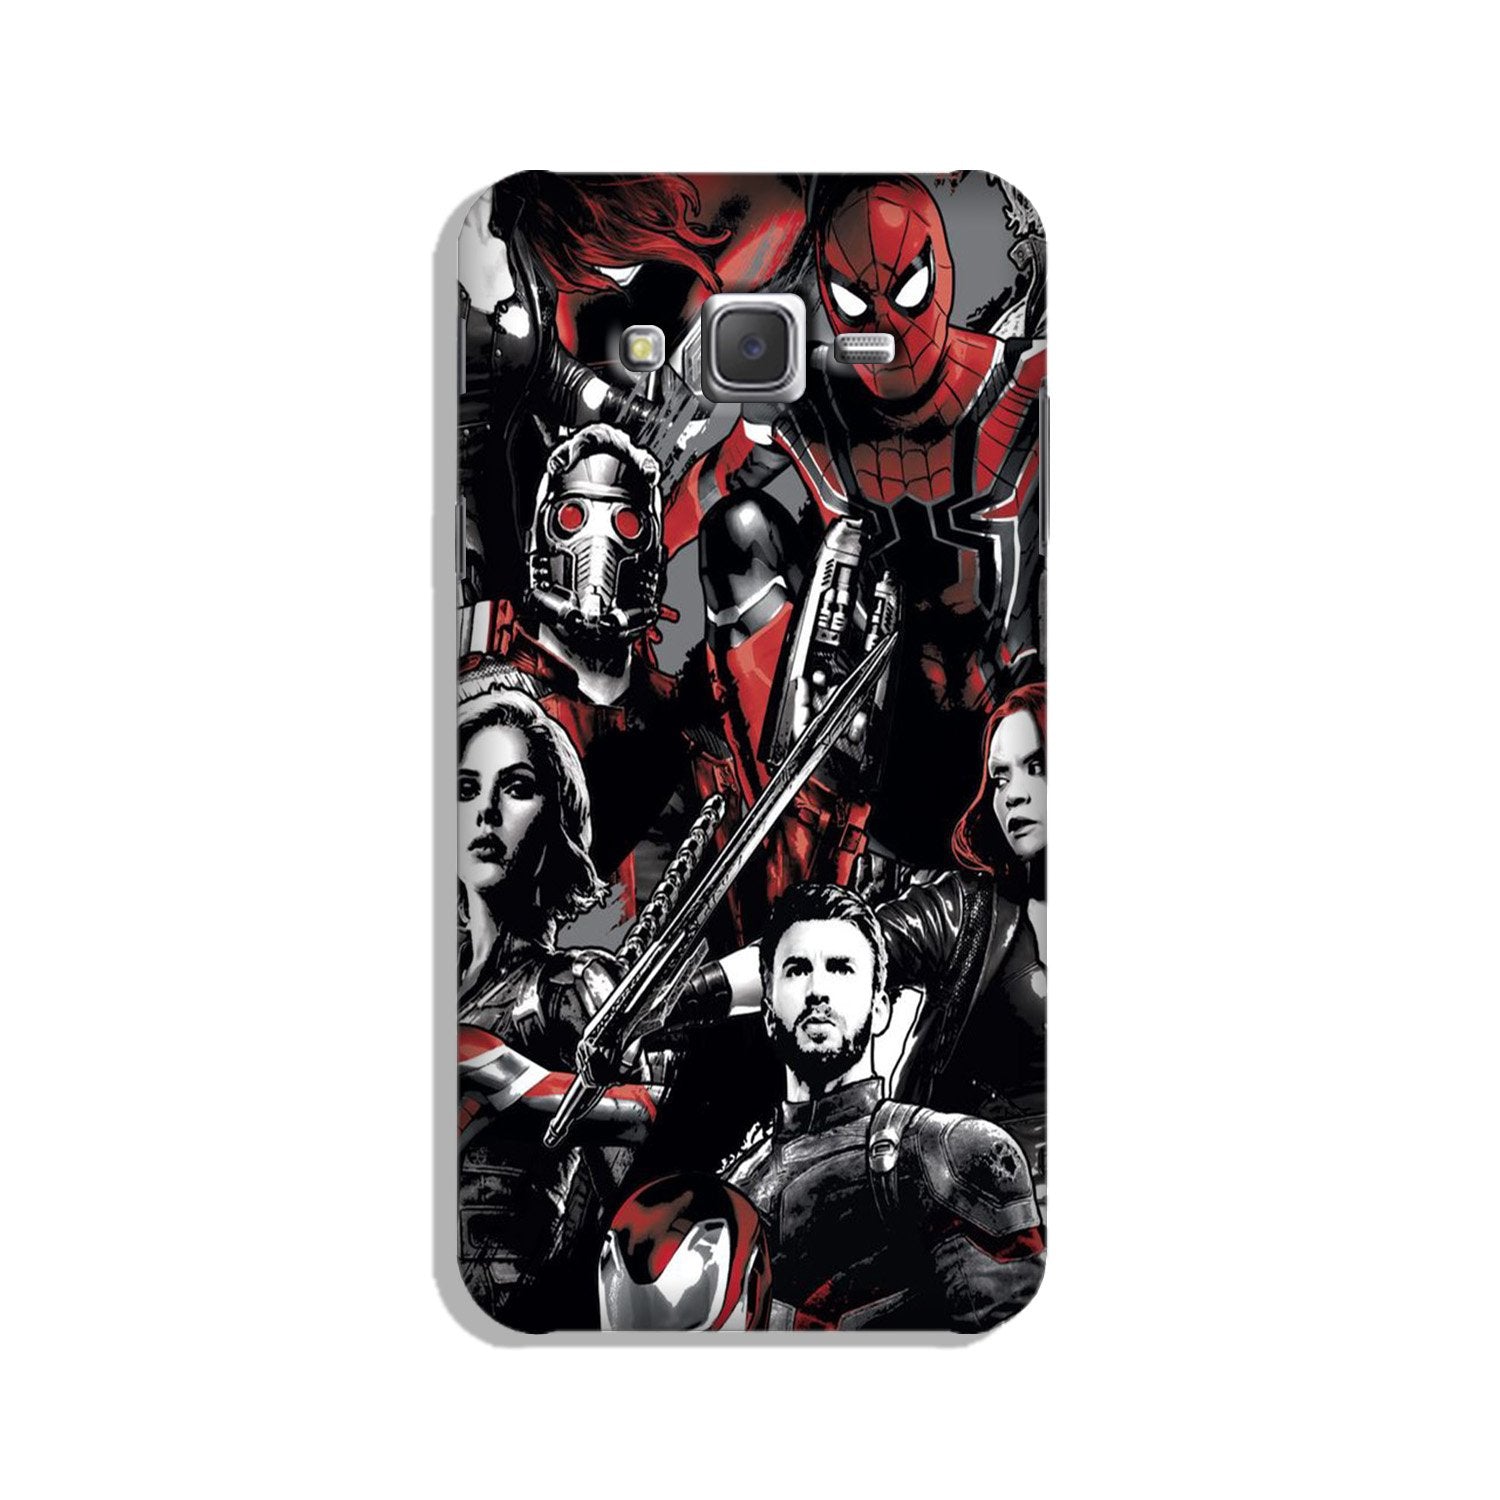 Avengers Case for Galaxy J7 Nxt (Design - 190)